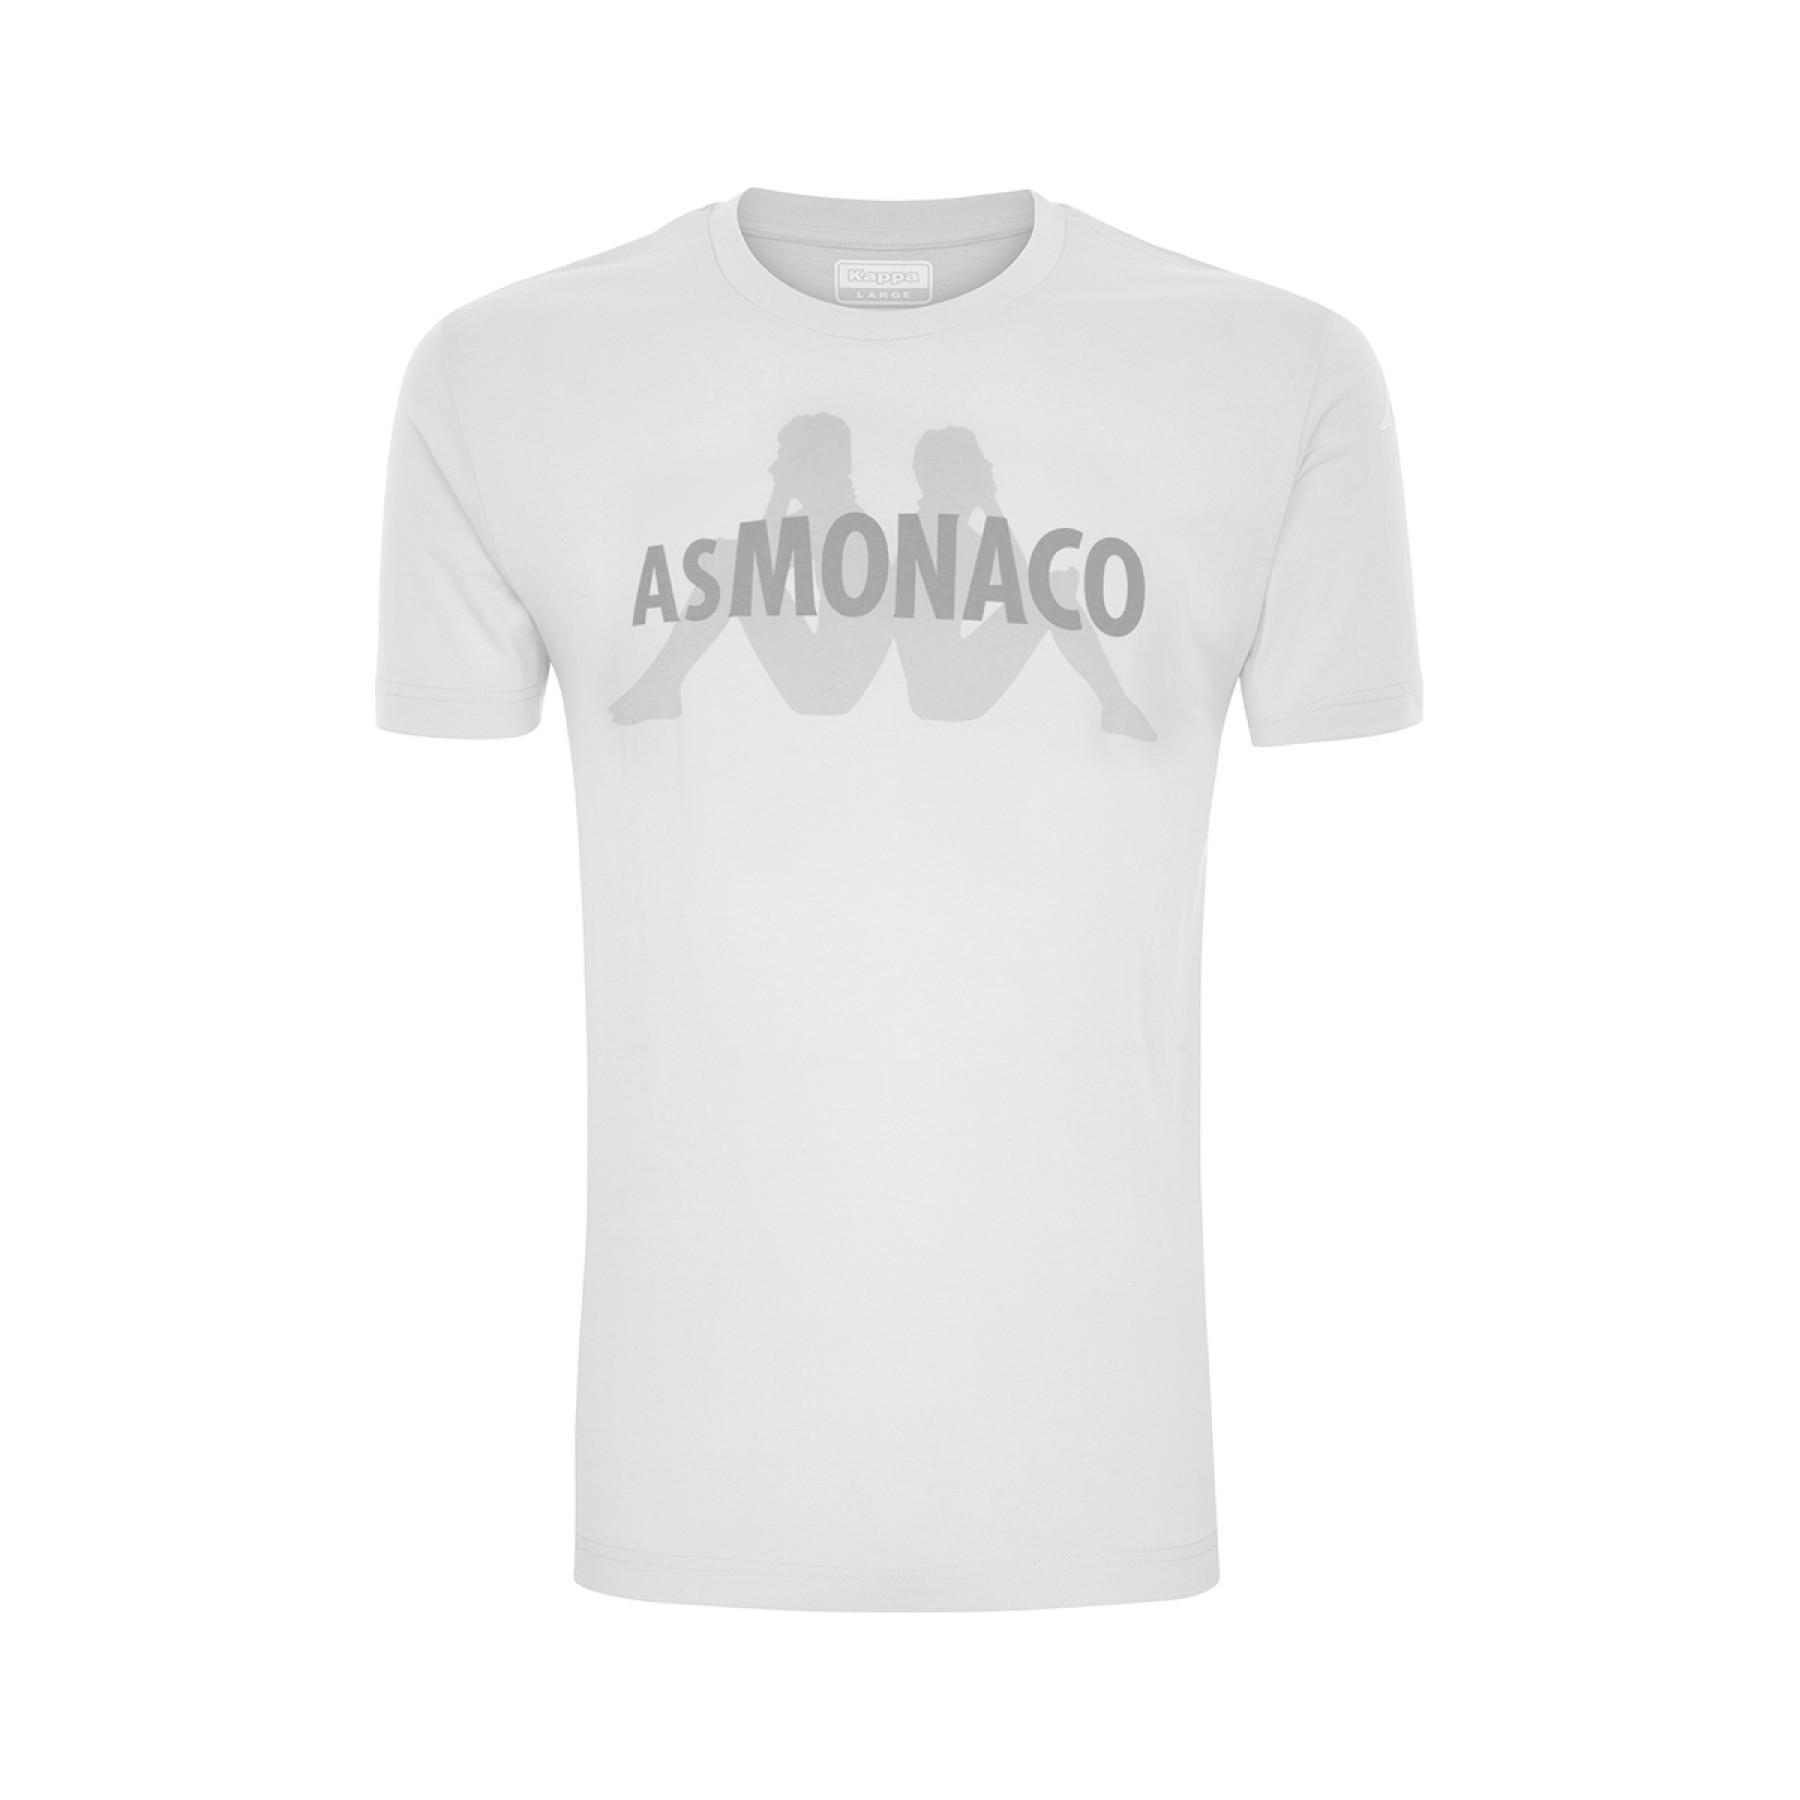 Kinder-T-Shirt AS Monaco 2020/21 avlei